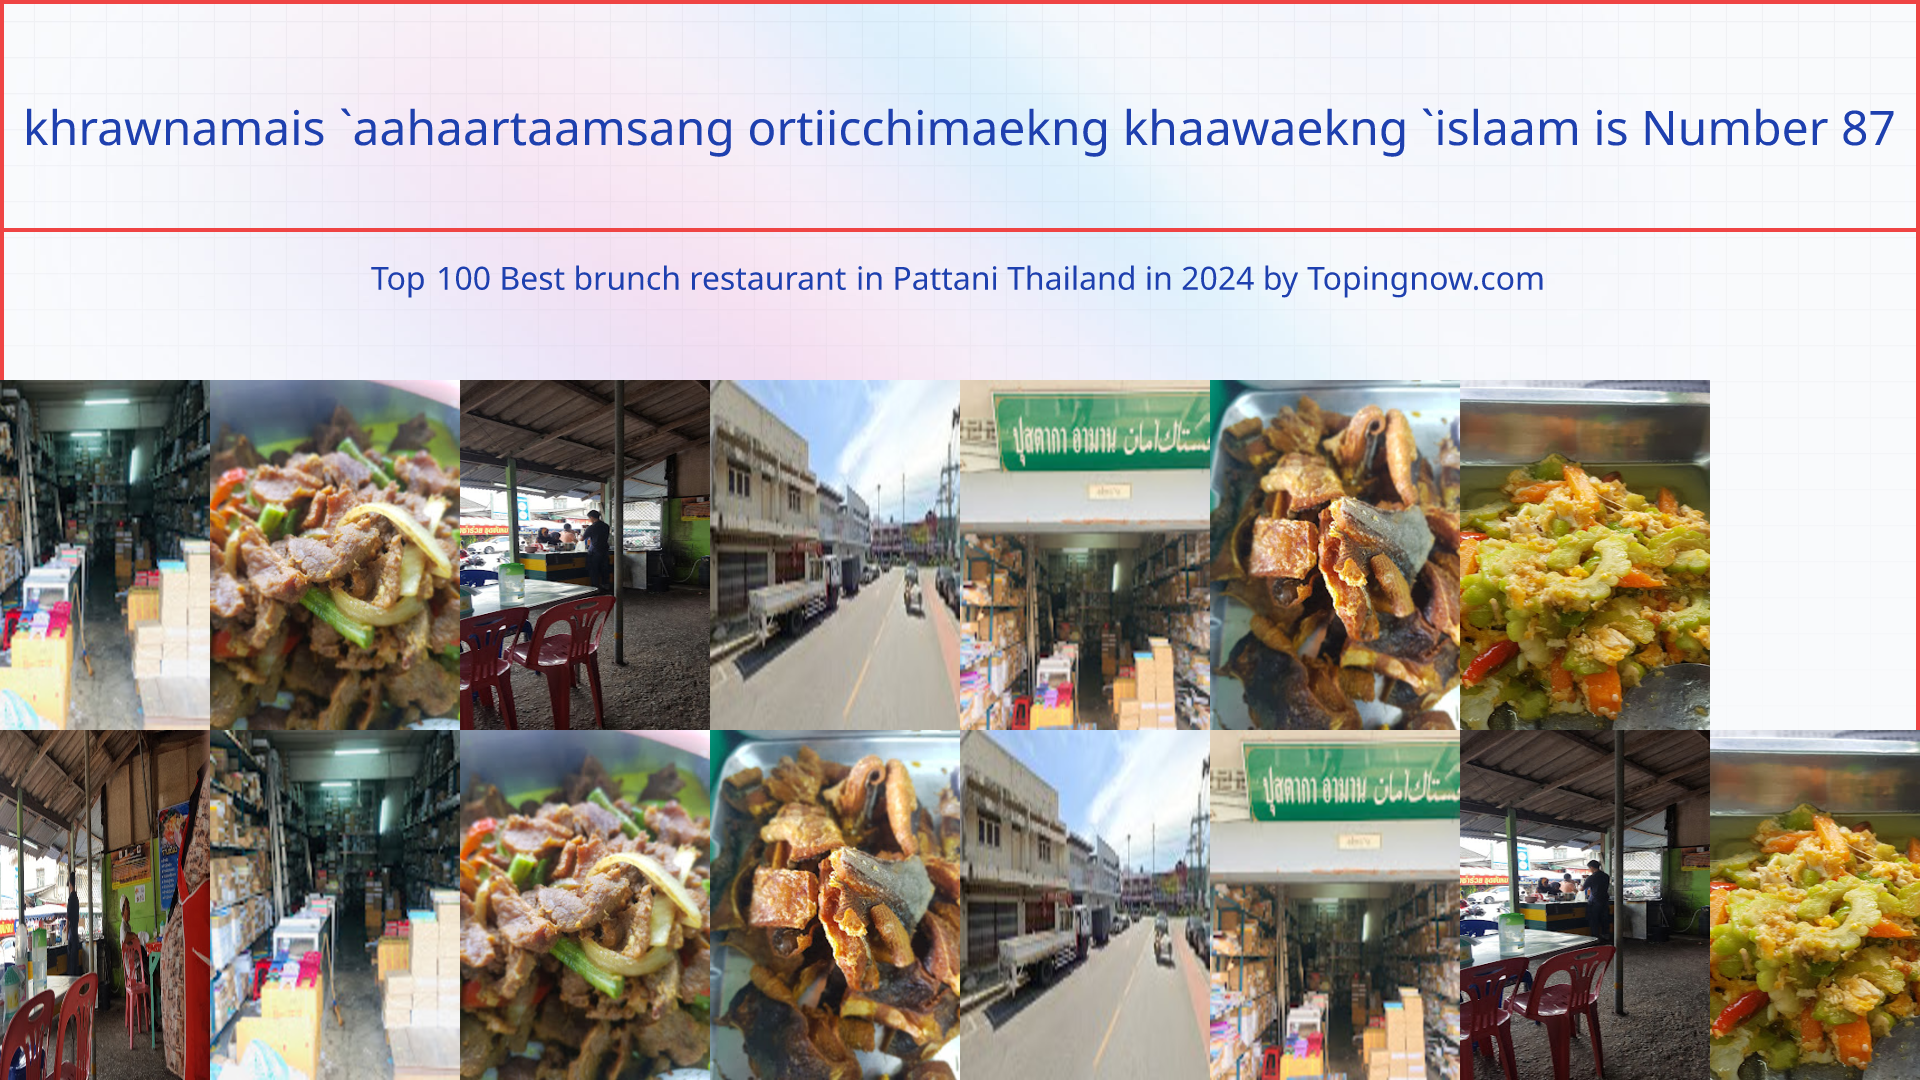 khrawnamais `aahaartaamsang ortiicchimaekng khaawaekng `islaam: Top 100 Best brunch restaurant in Pattani Thailand in 2024